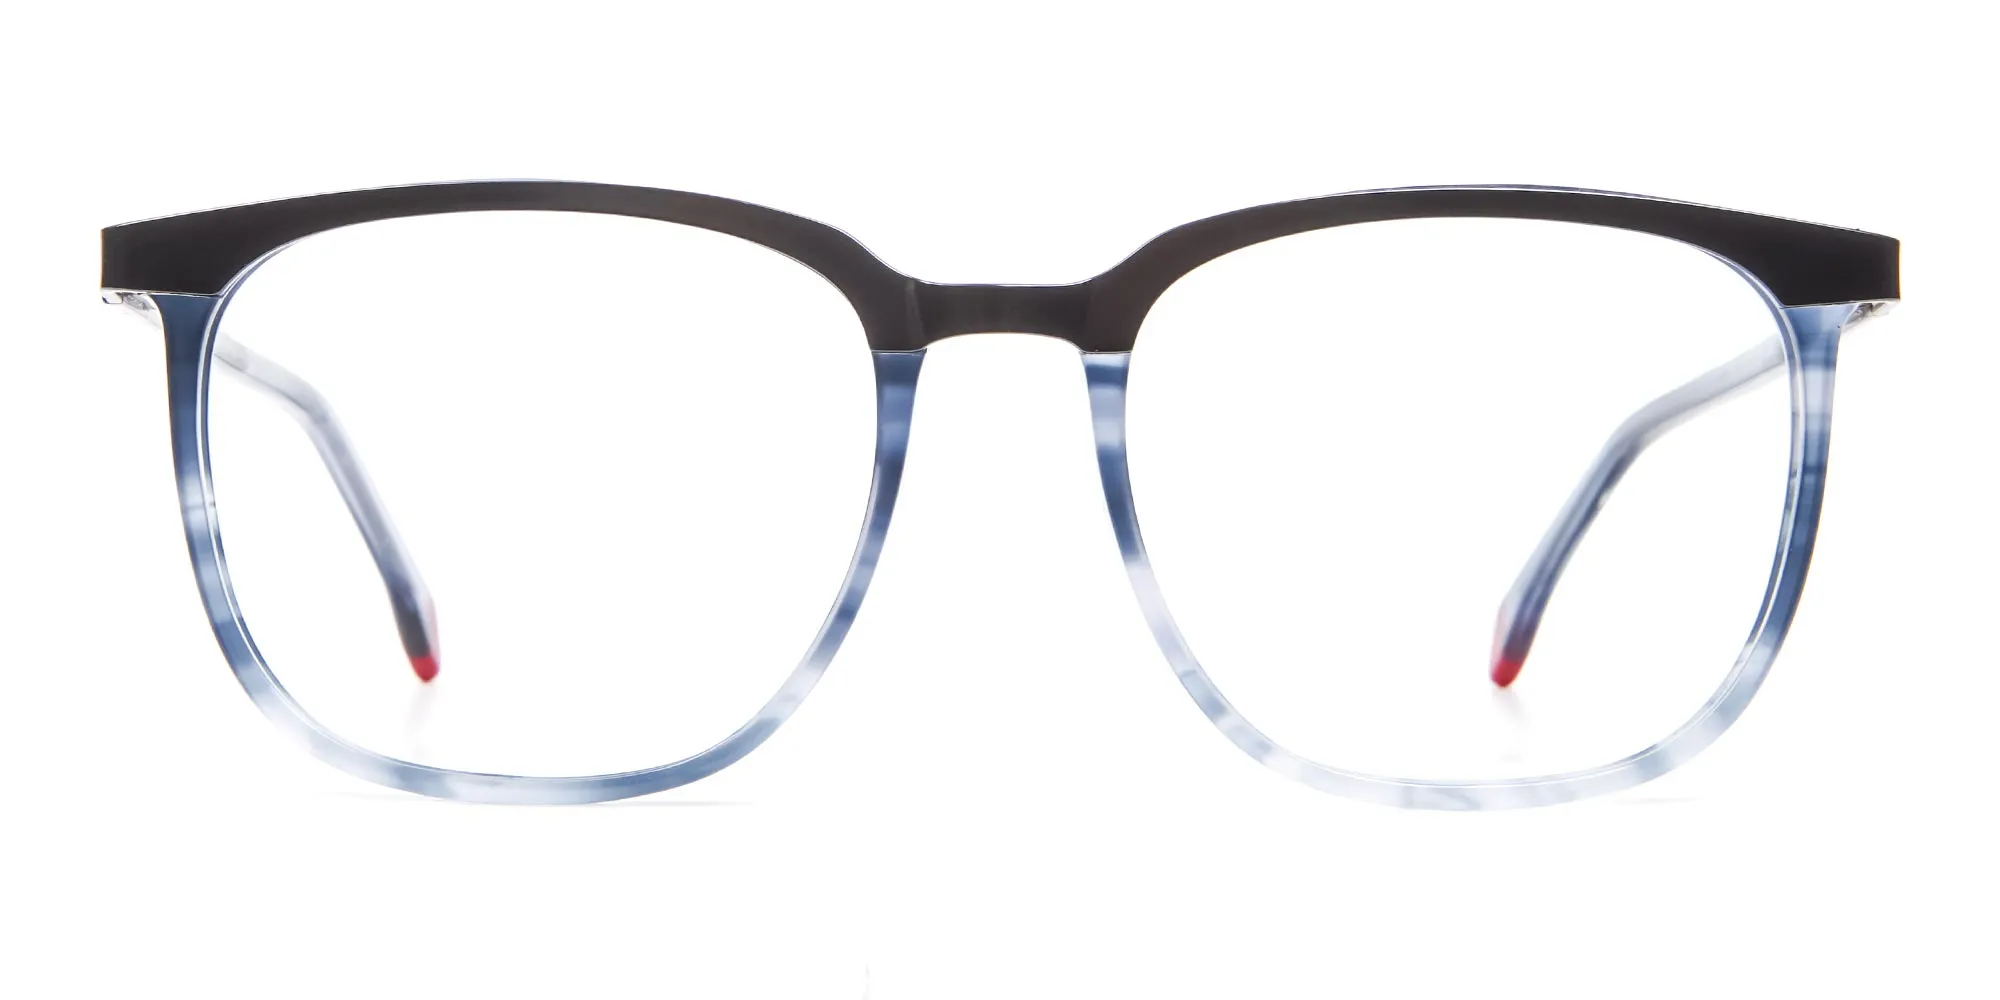 Smoky Blue Framed Glasses - 1